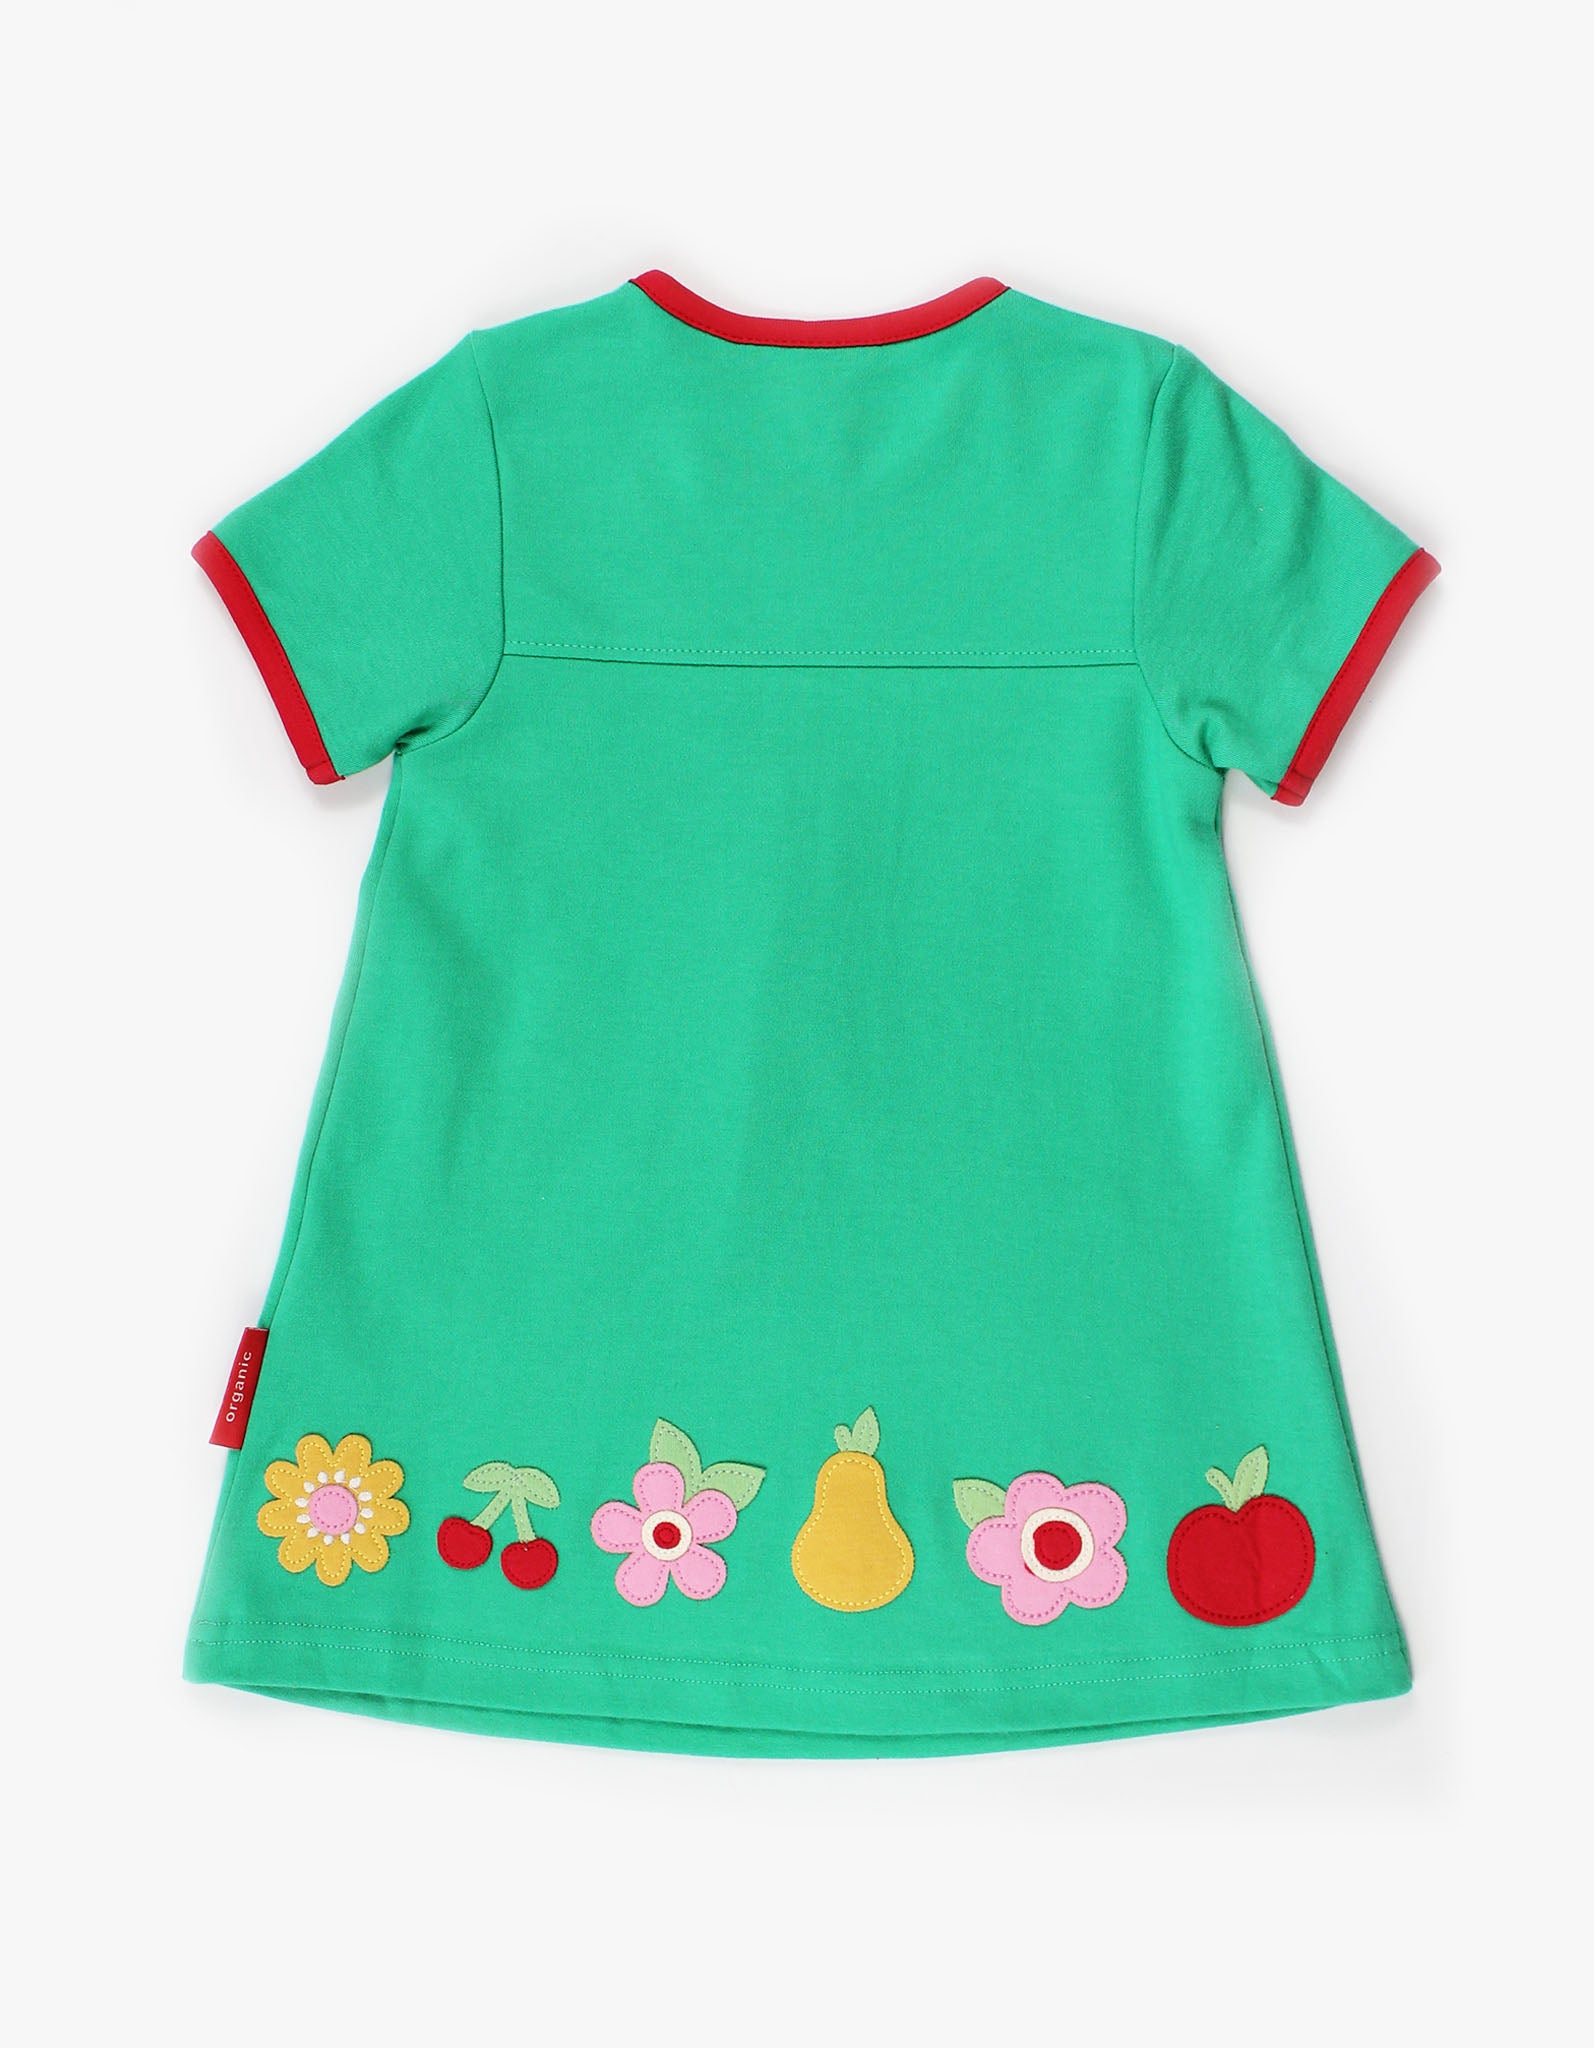 Toby Tiger Organic Long Sleeve T-Shirt Dress - Fruit Flower Applique